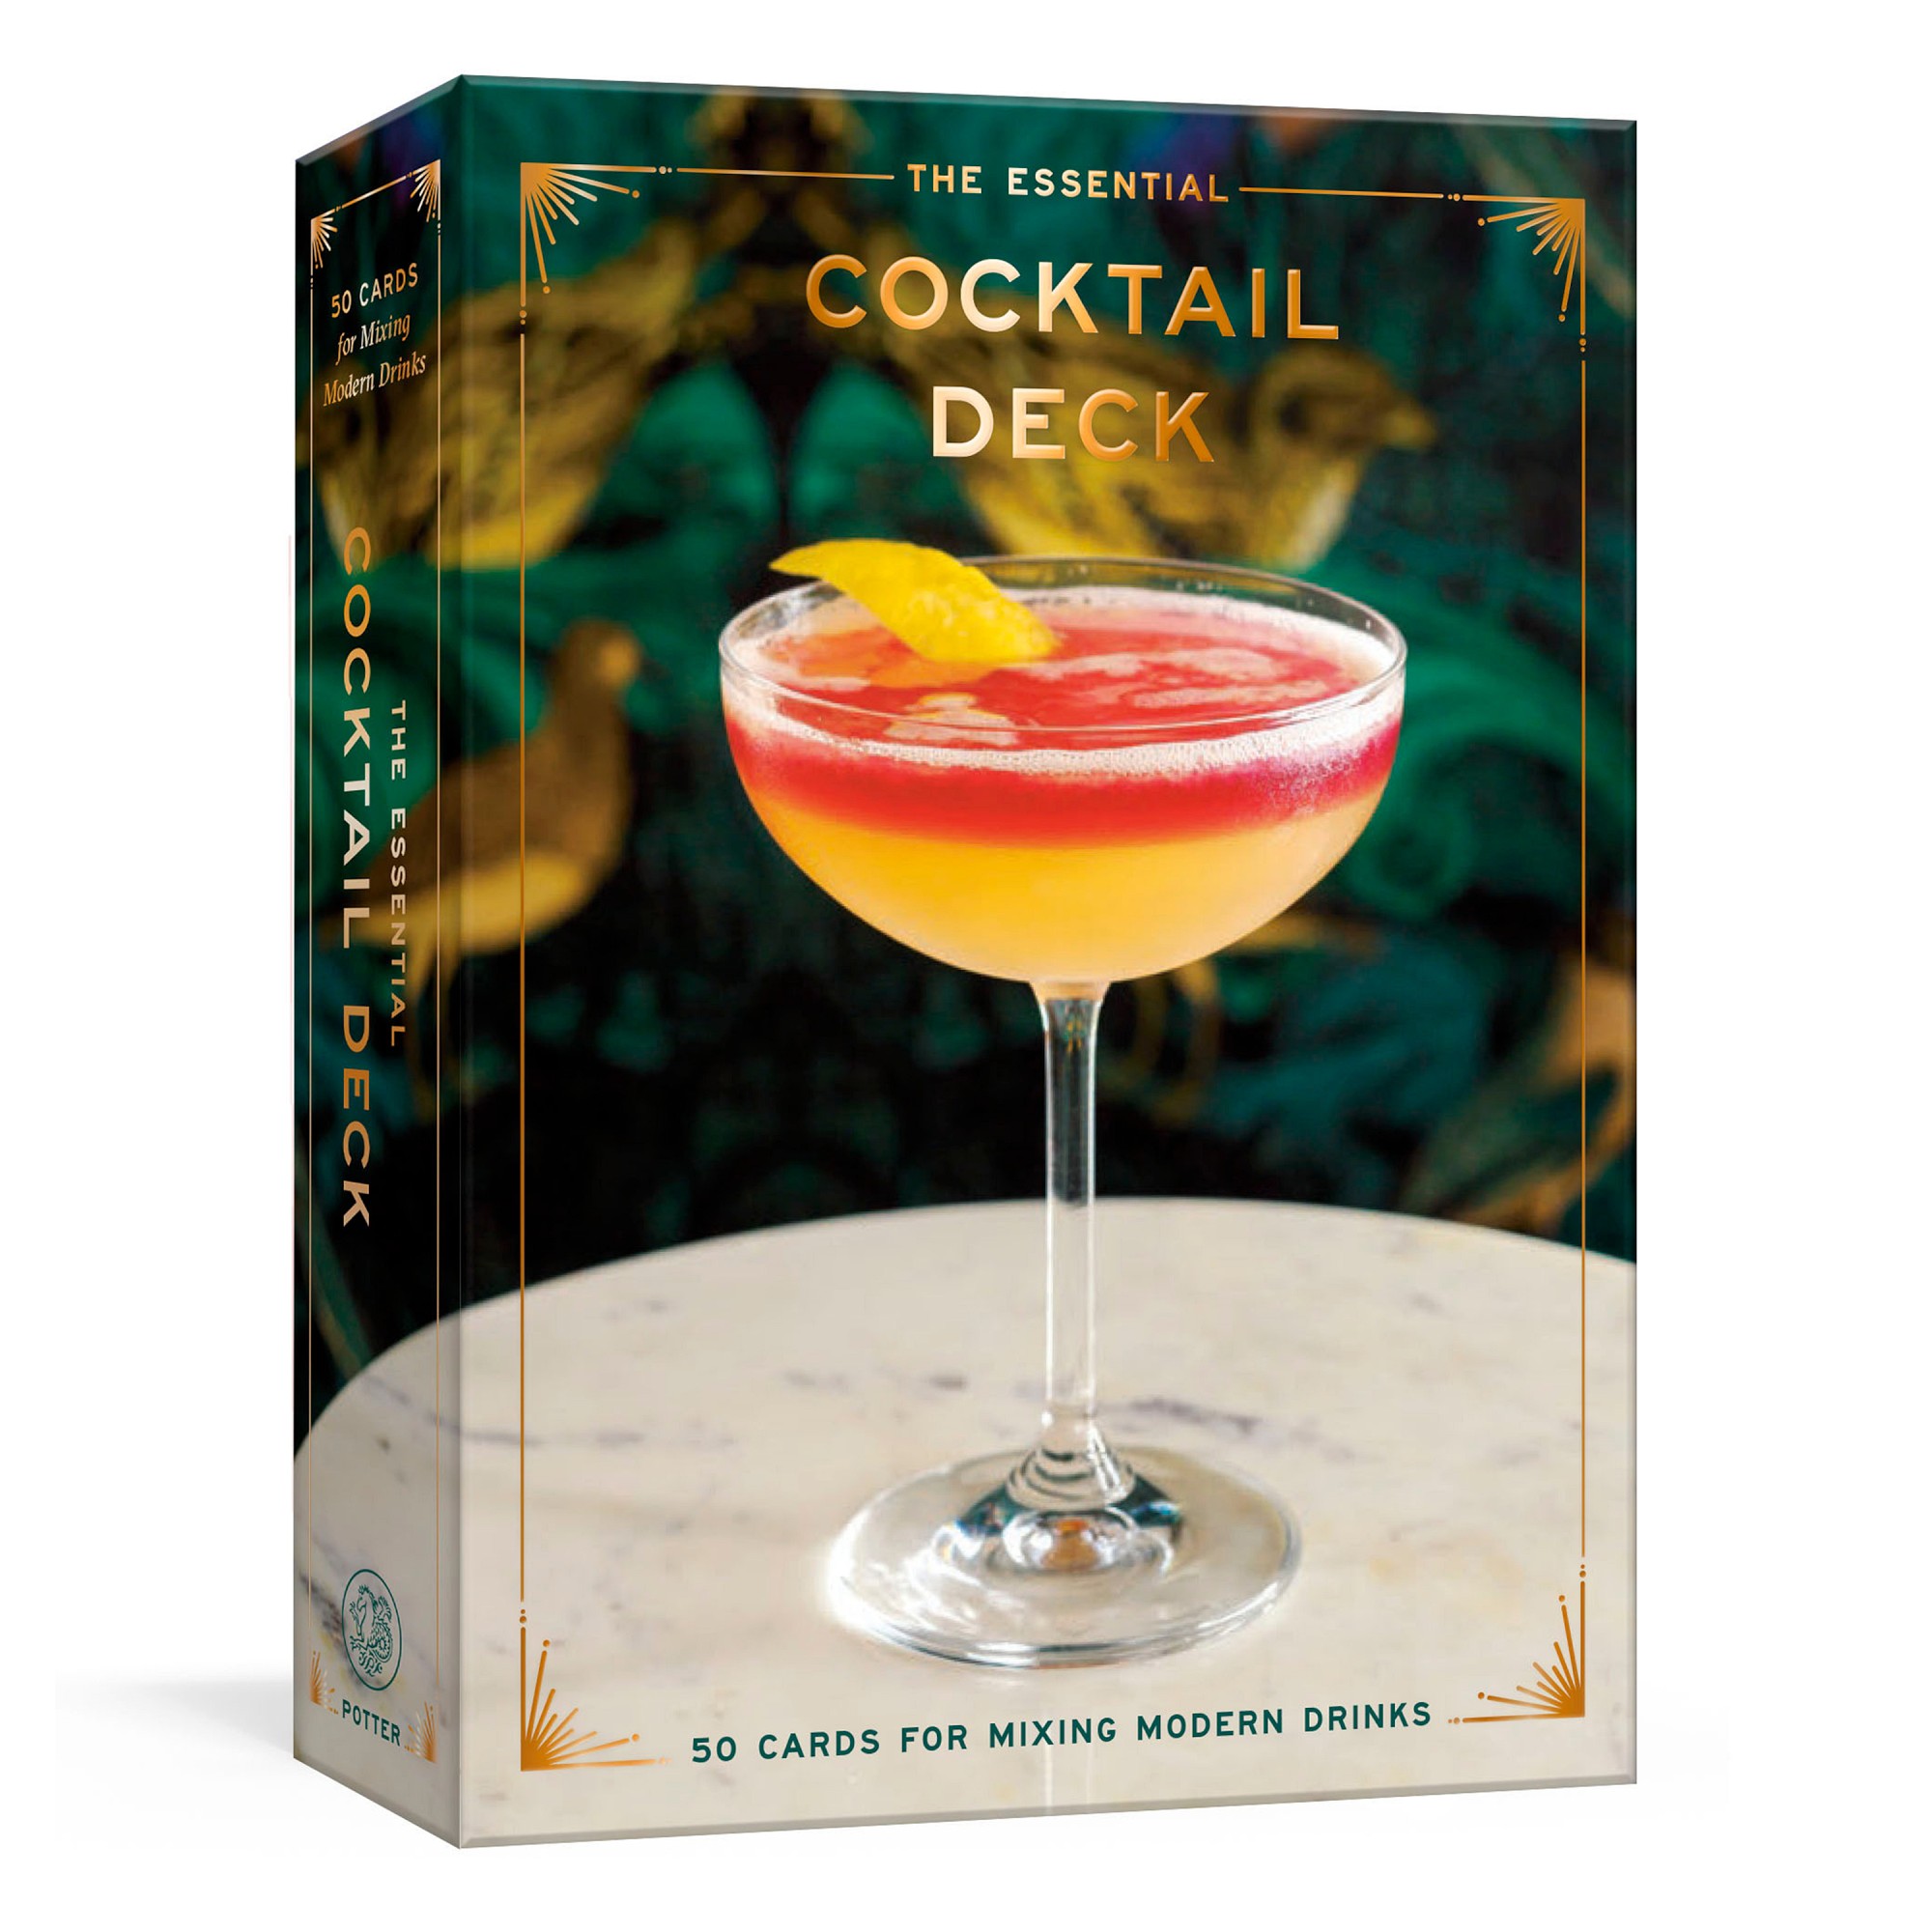 Potter Gift, Daniel Krieger: The Essential Cocktail Deck